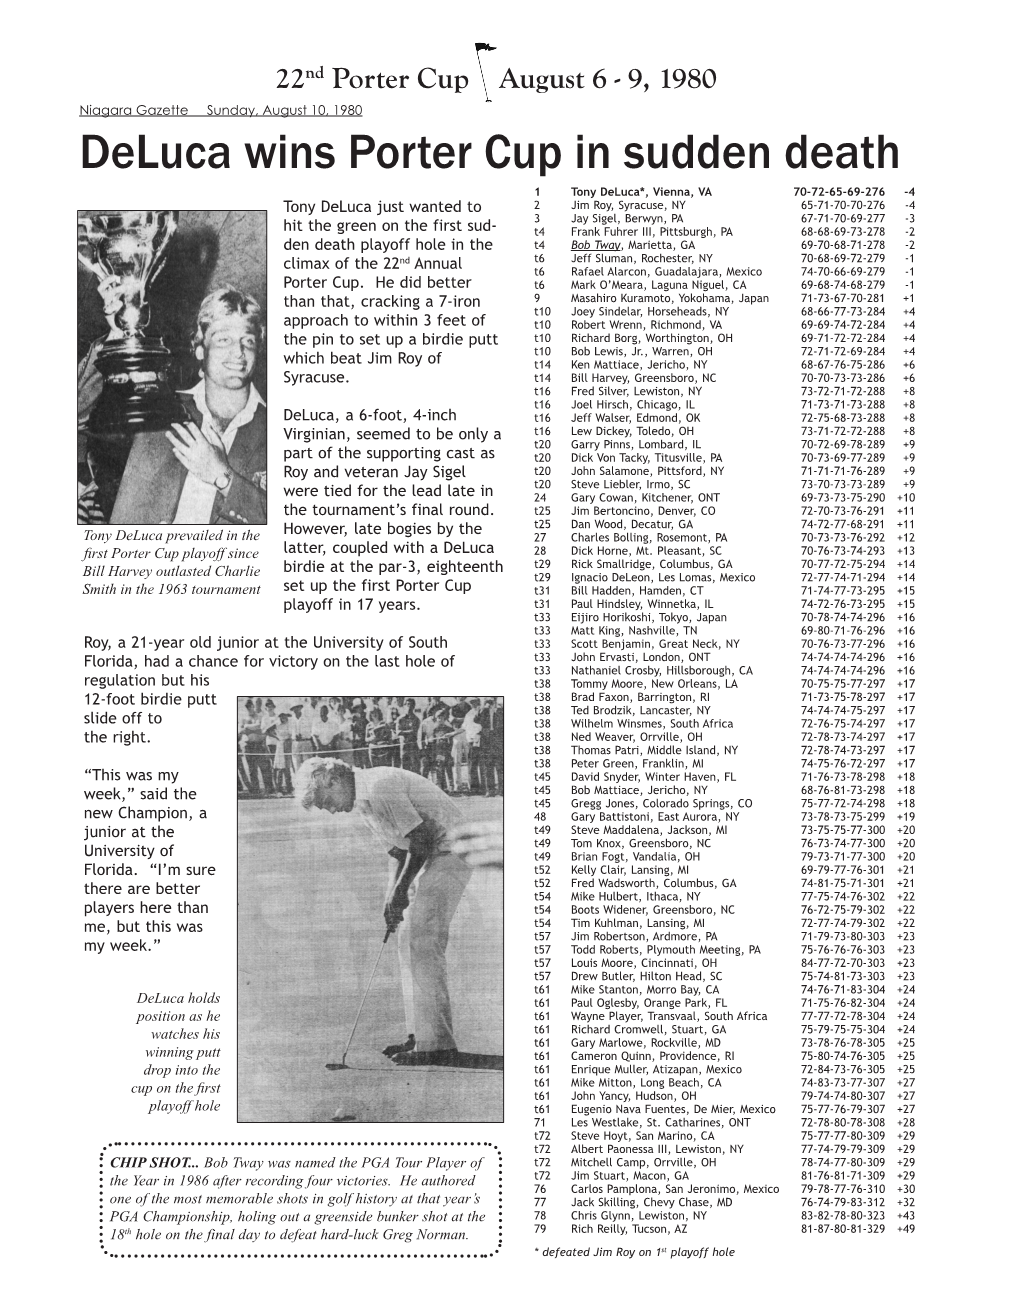 Deluca Wins Porter Cup in Sudden Death